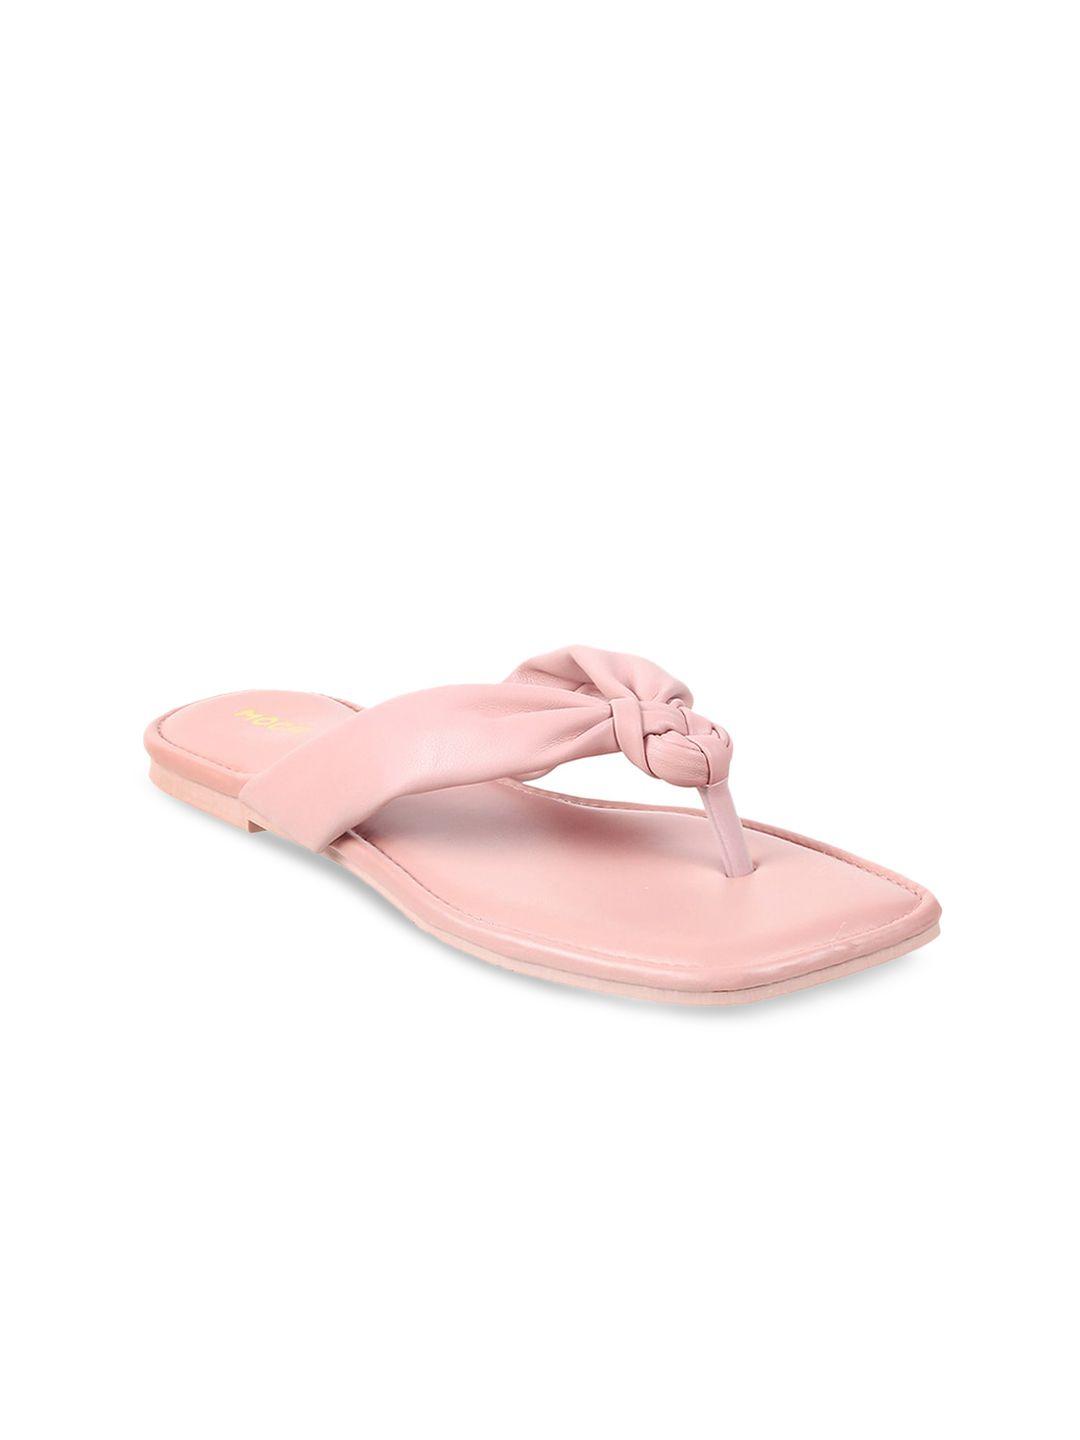 mochi-women-pink-open-toe-flats